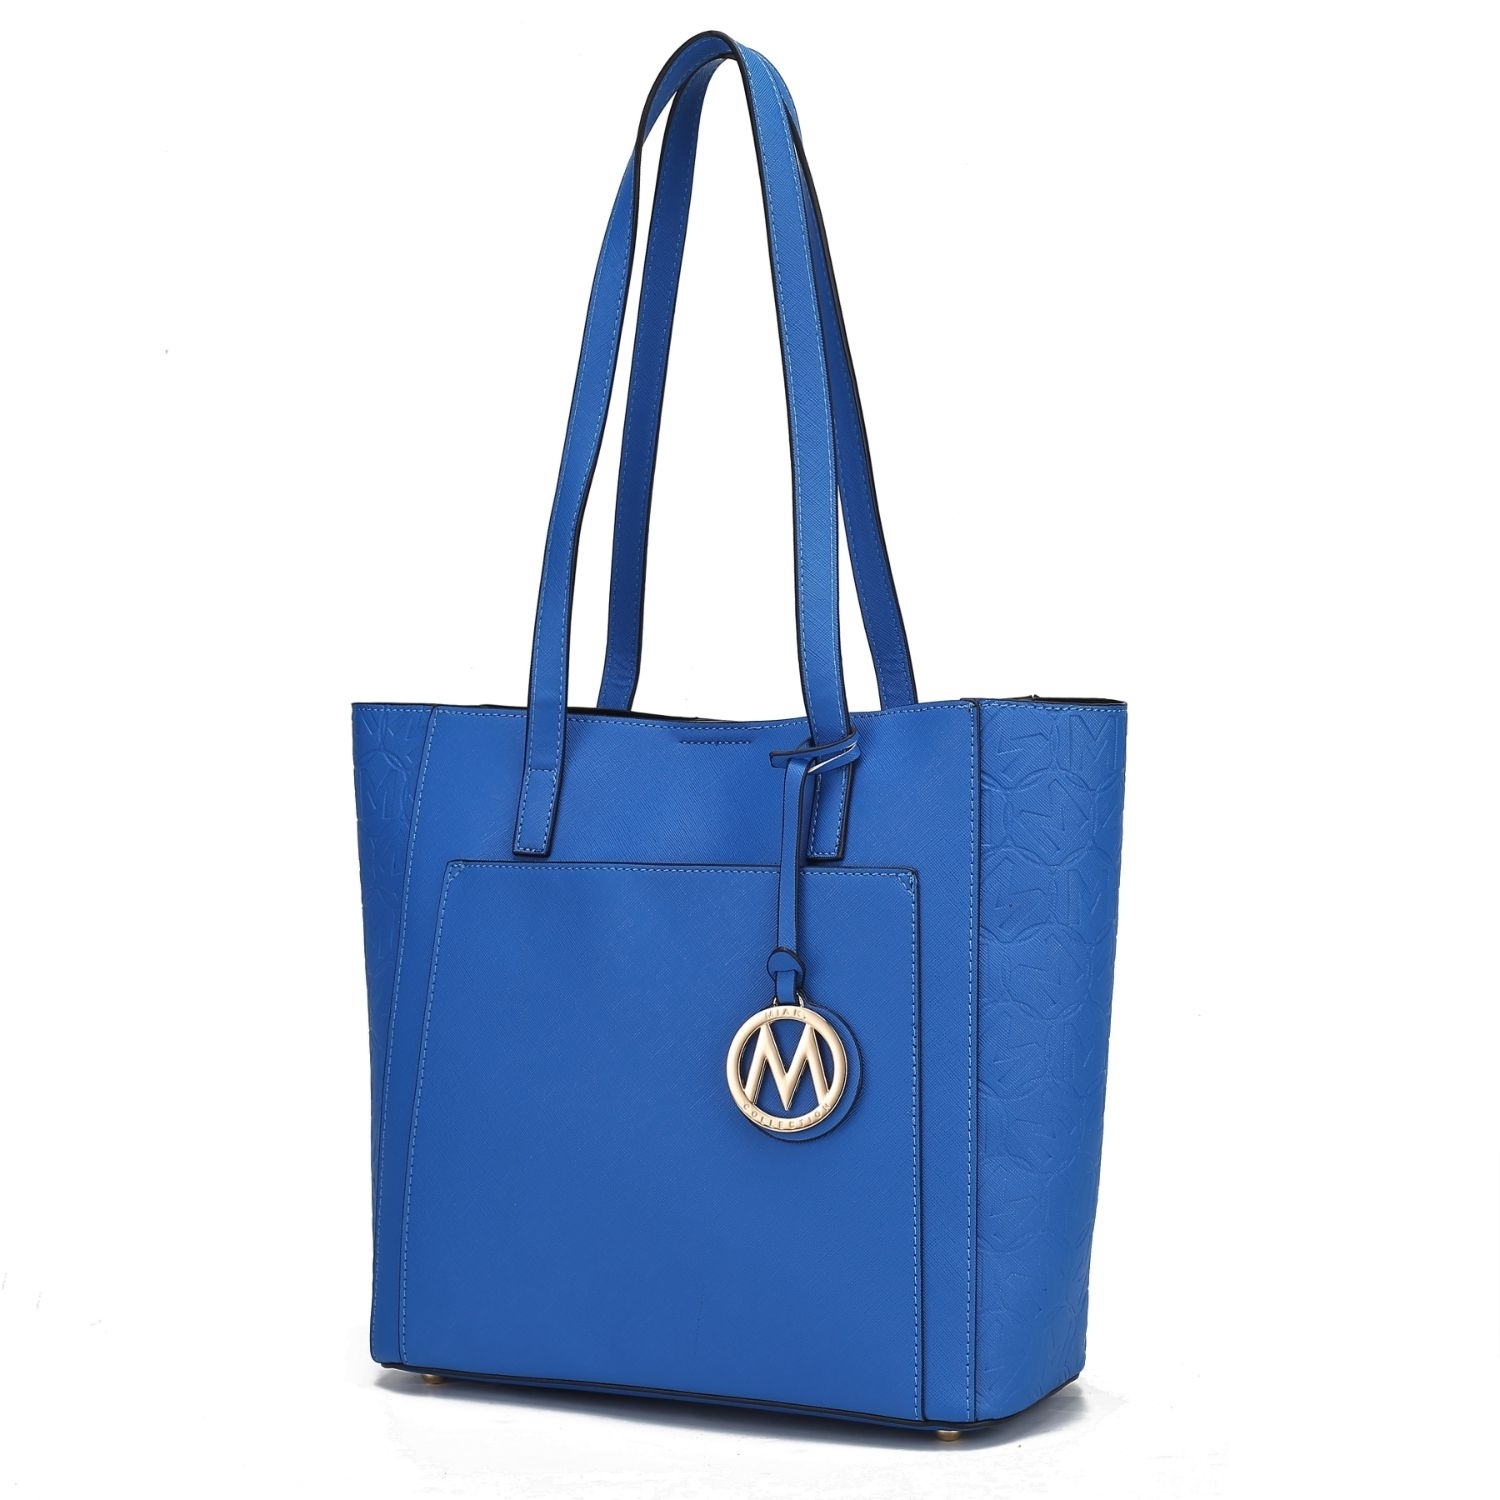 MKF Collection Lea Vegan Leather Women's Tote Handbag By Mia K. - Royal Blue